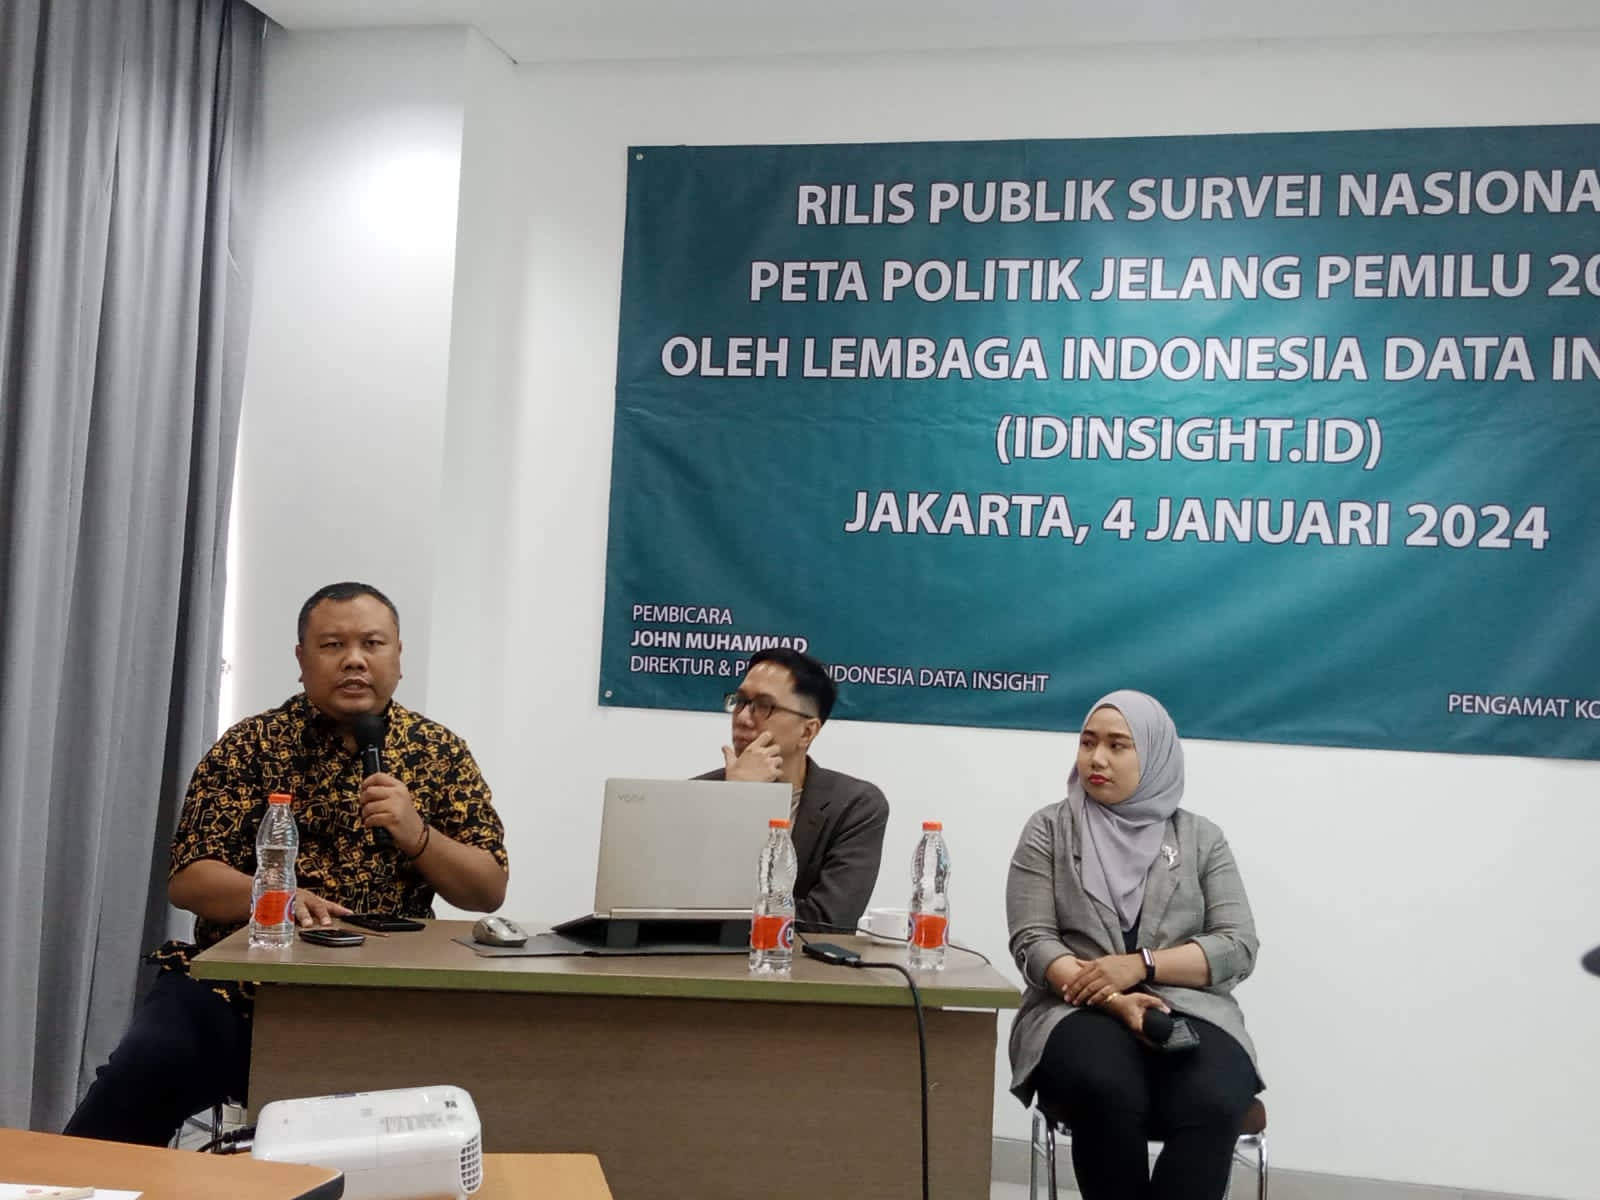 Hasil Lembaga Survei Data Insight Ganjar Pranowo Raih Suara 34.7%,35% kemudian di susul Prabowo Subianto dan Anies Baswedan 